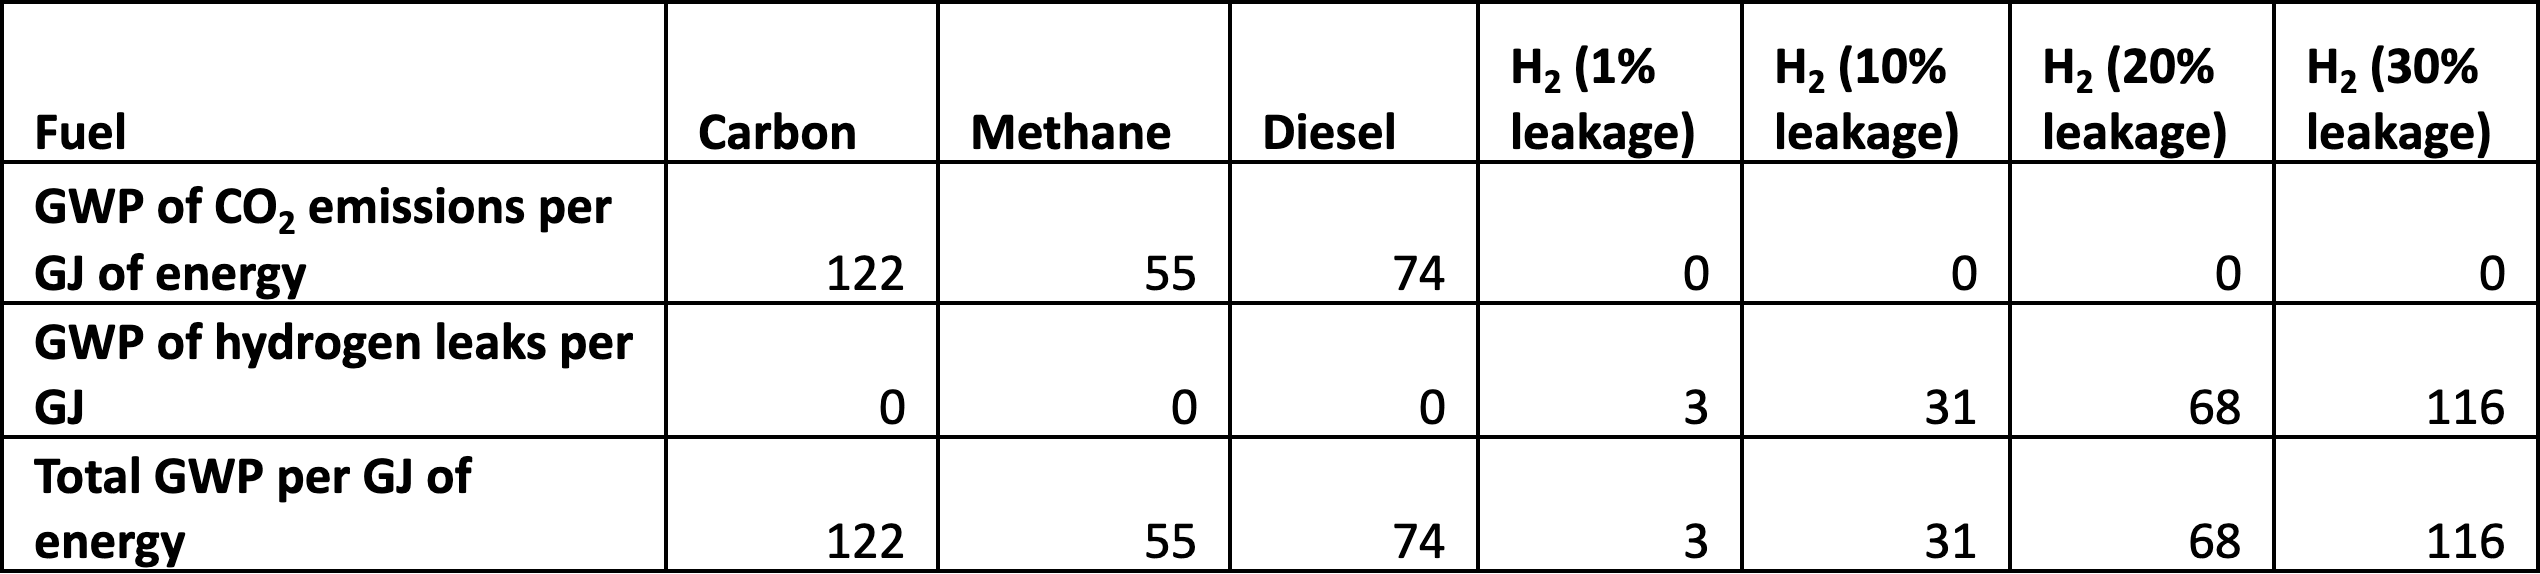 Hydrogen data table